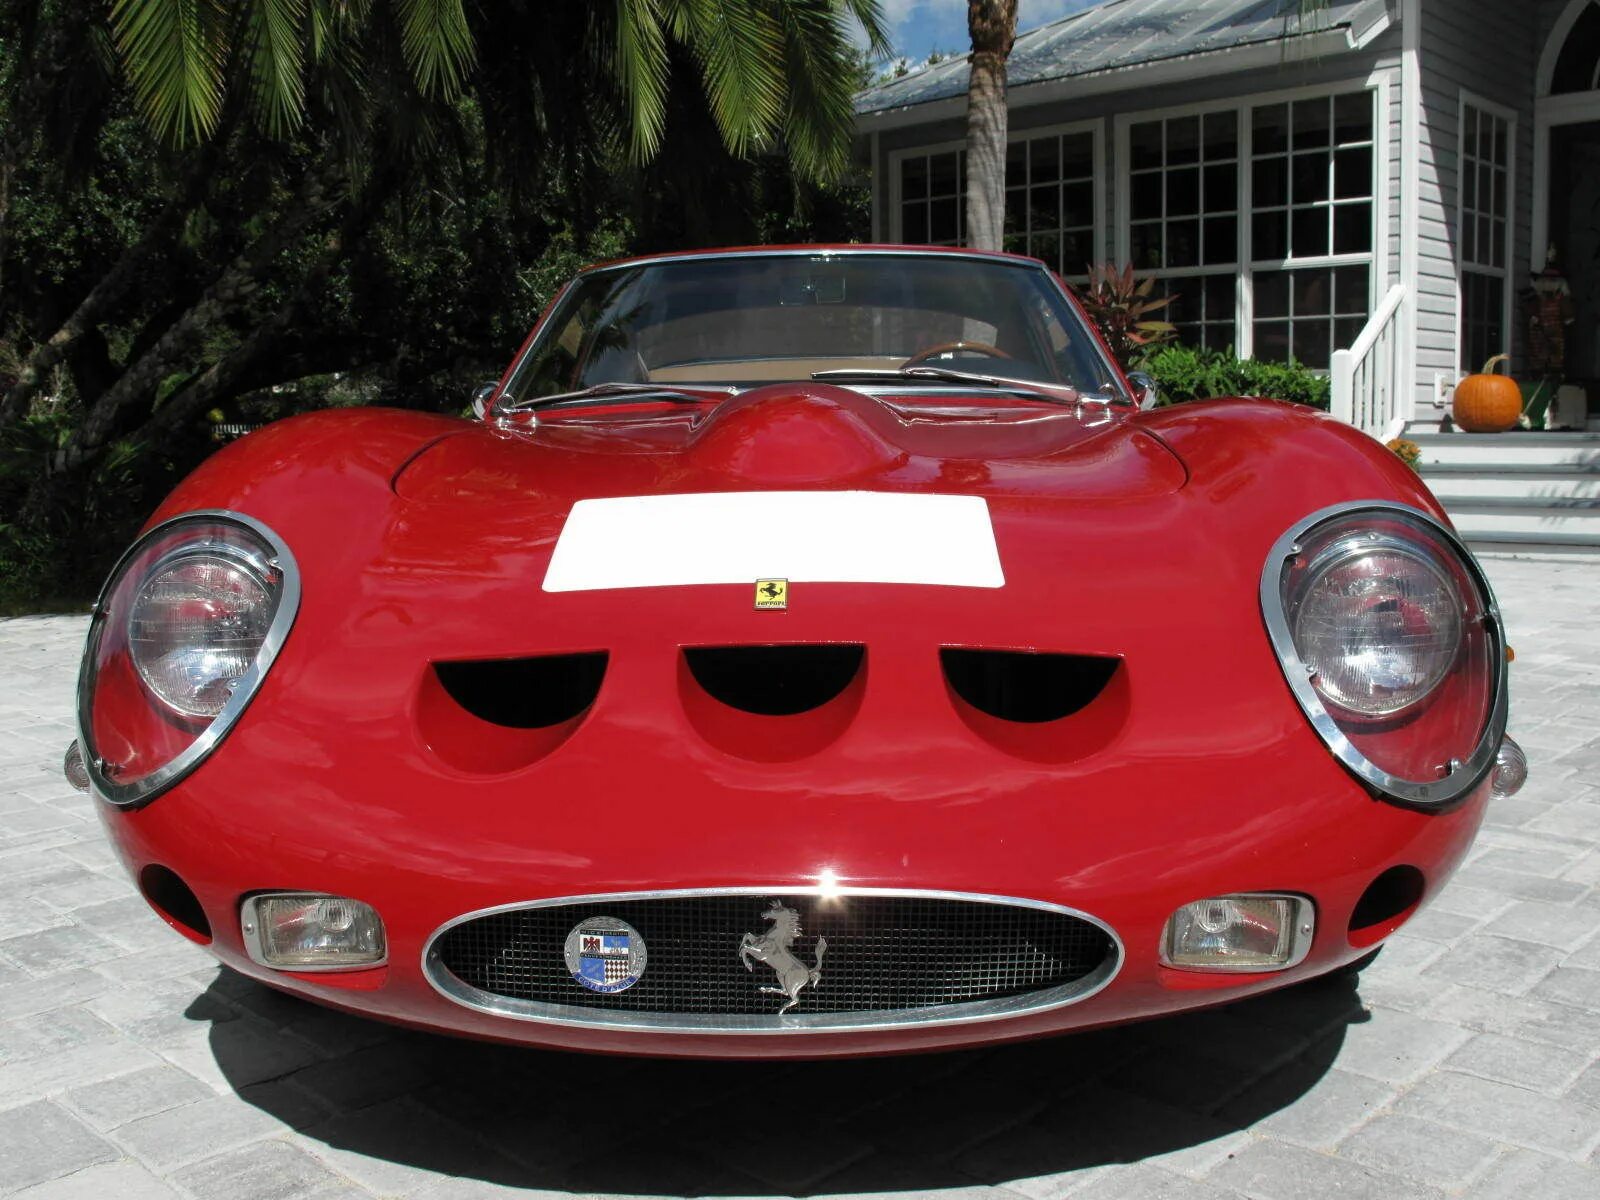 Ferrari 1962. Феррари Берлинетта 1962. Ferrari 250 GTO. 250 GTO Ferrari kupe. Ferrari 250 GTO Black.